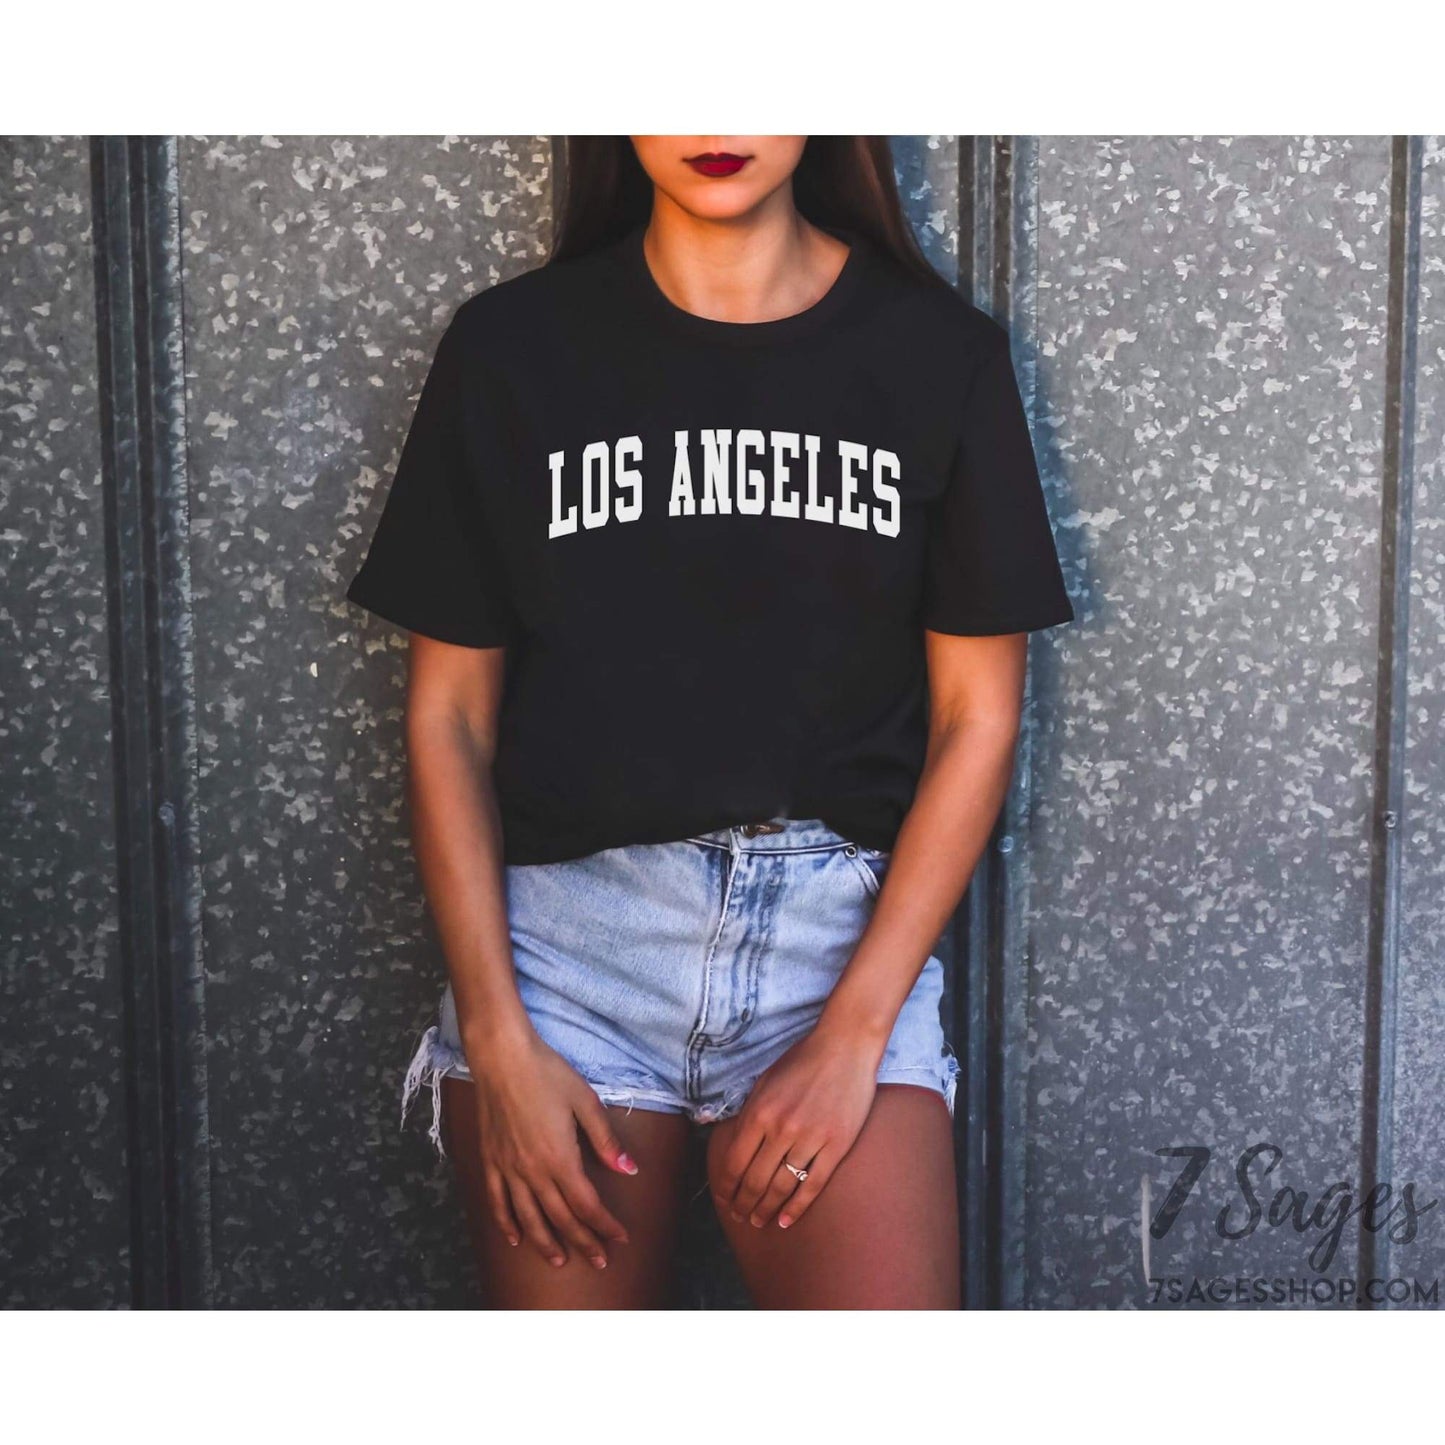 Los Angeles Shirt - Los Angeles Tshirt - Los Angeles Tee - California Shirt